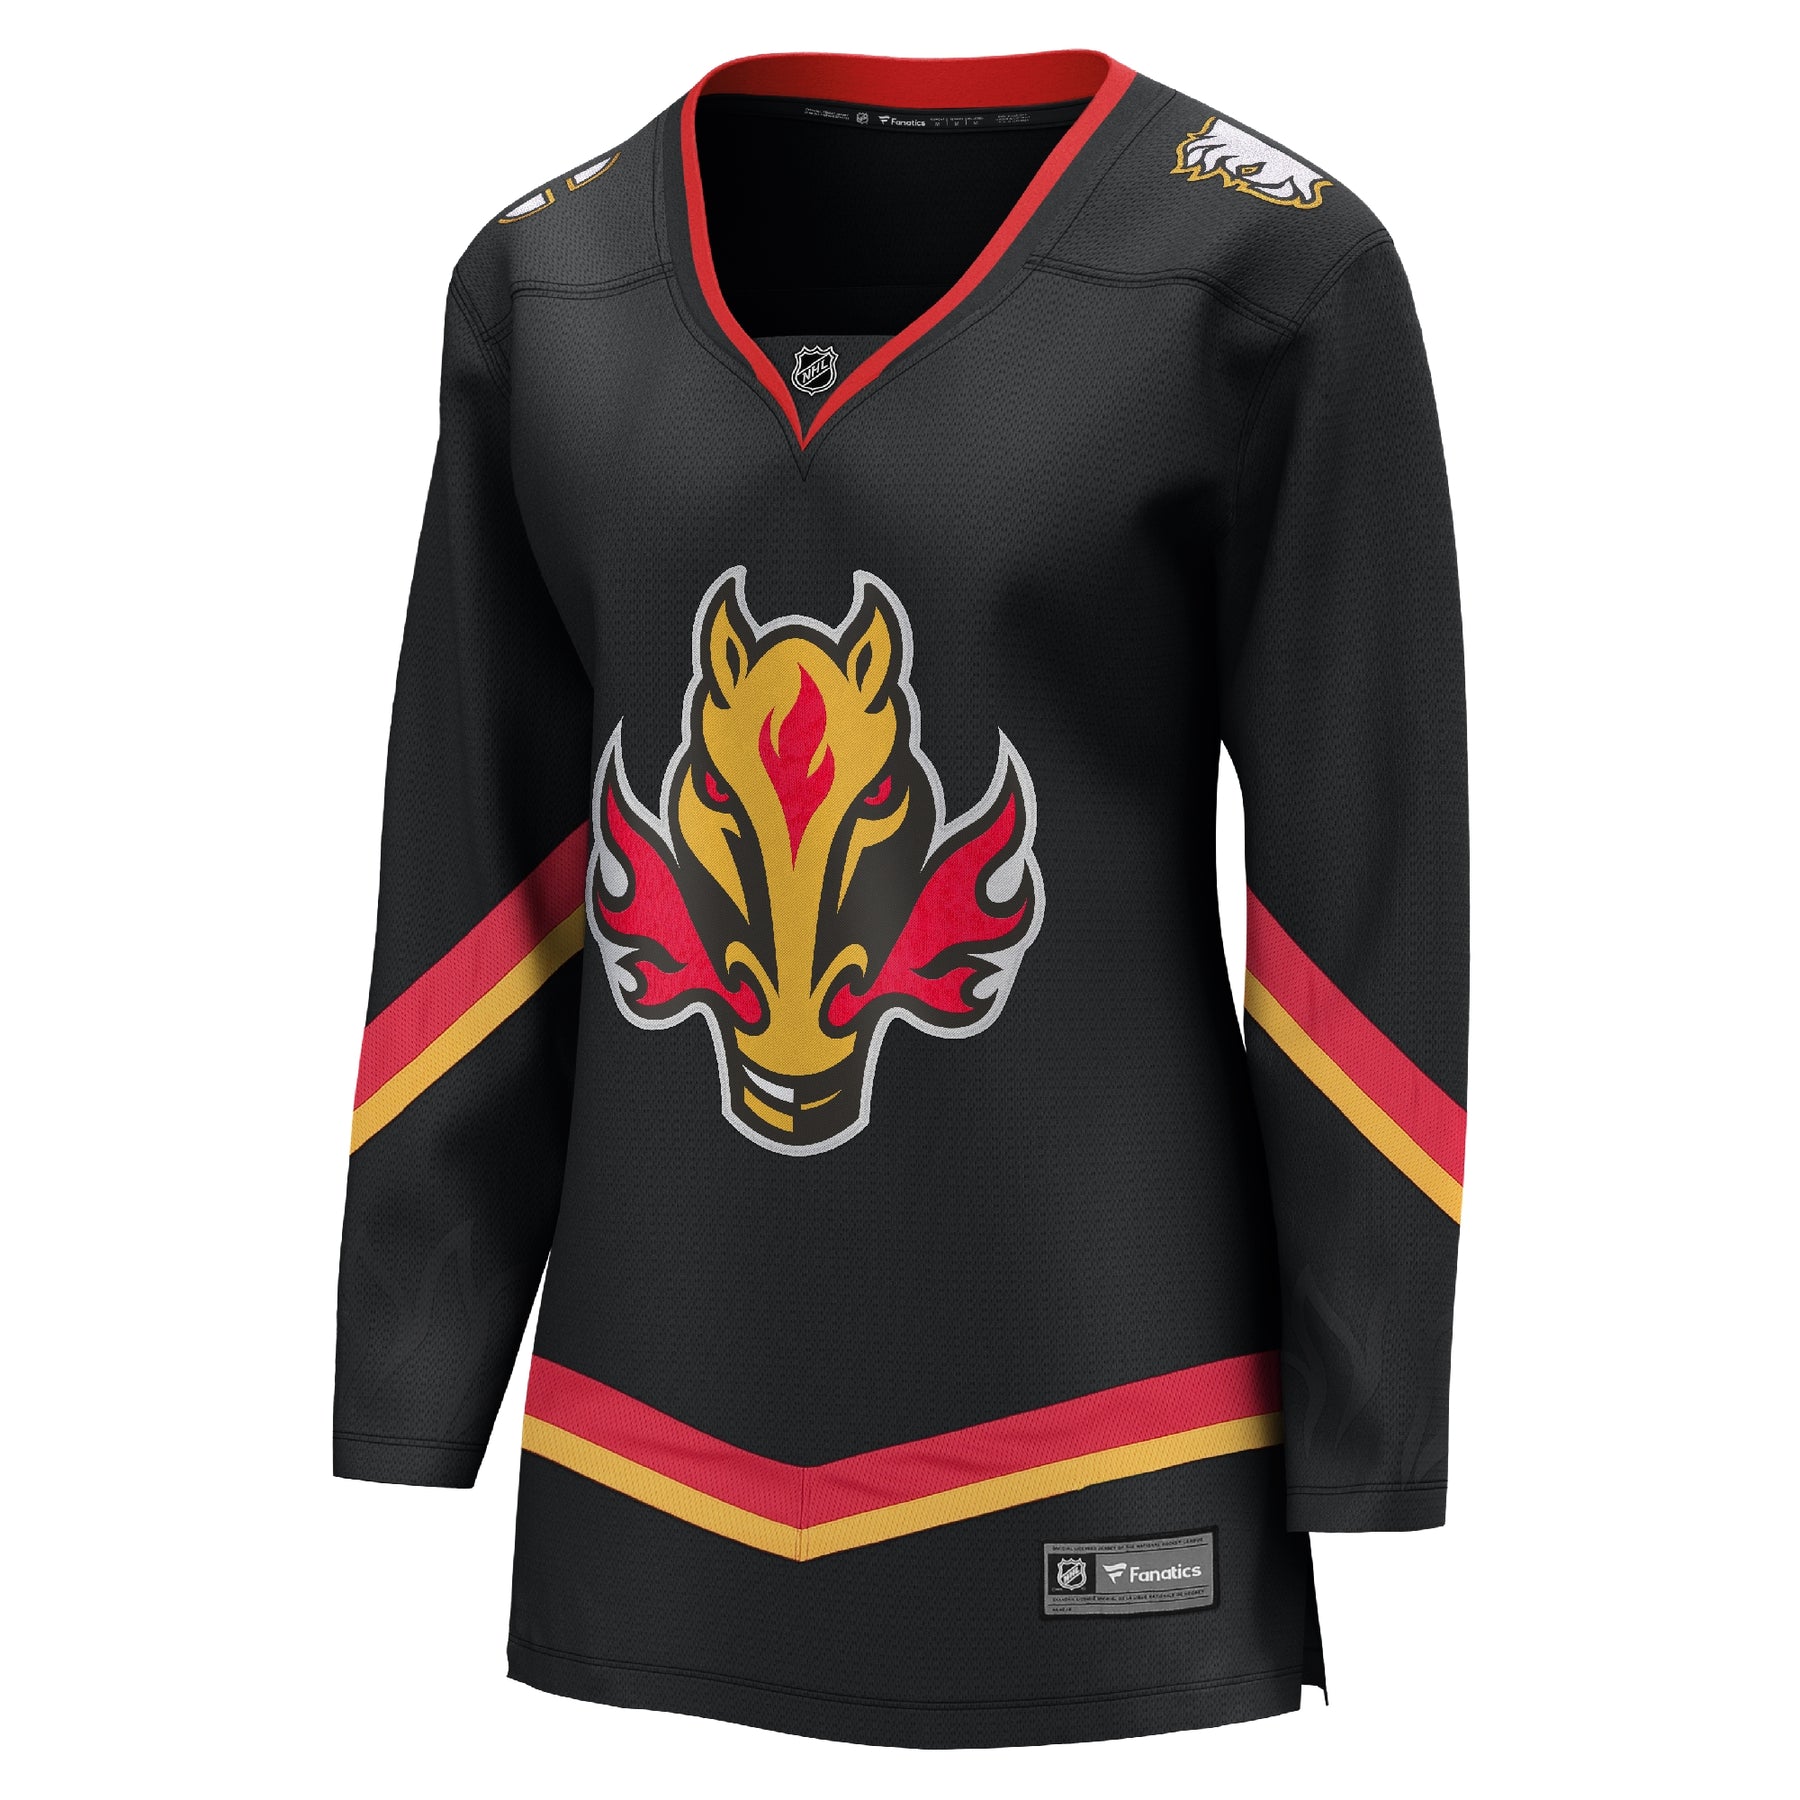 Fanatics Women's NHL Breakaway Calgary Flames Hockey Jersey Size Large NWT